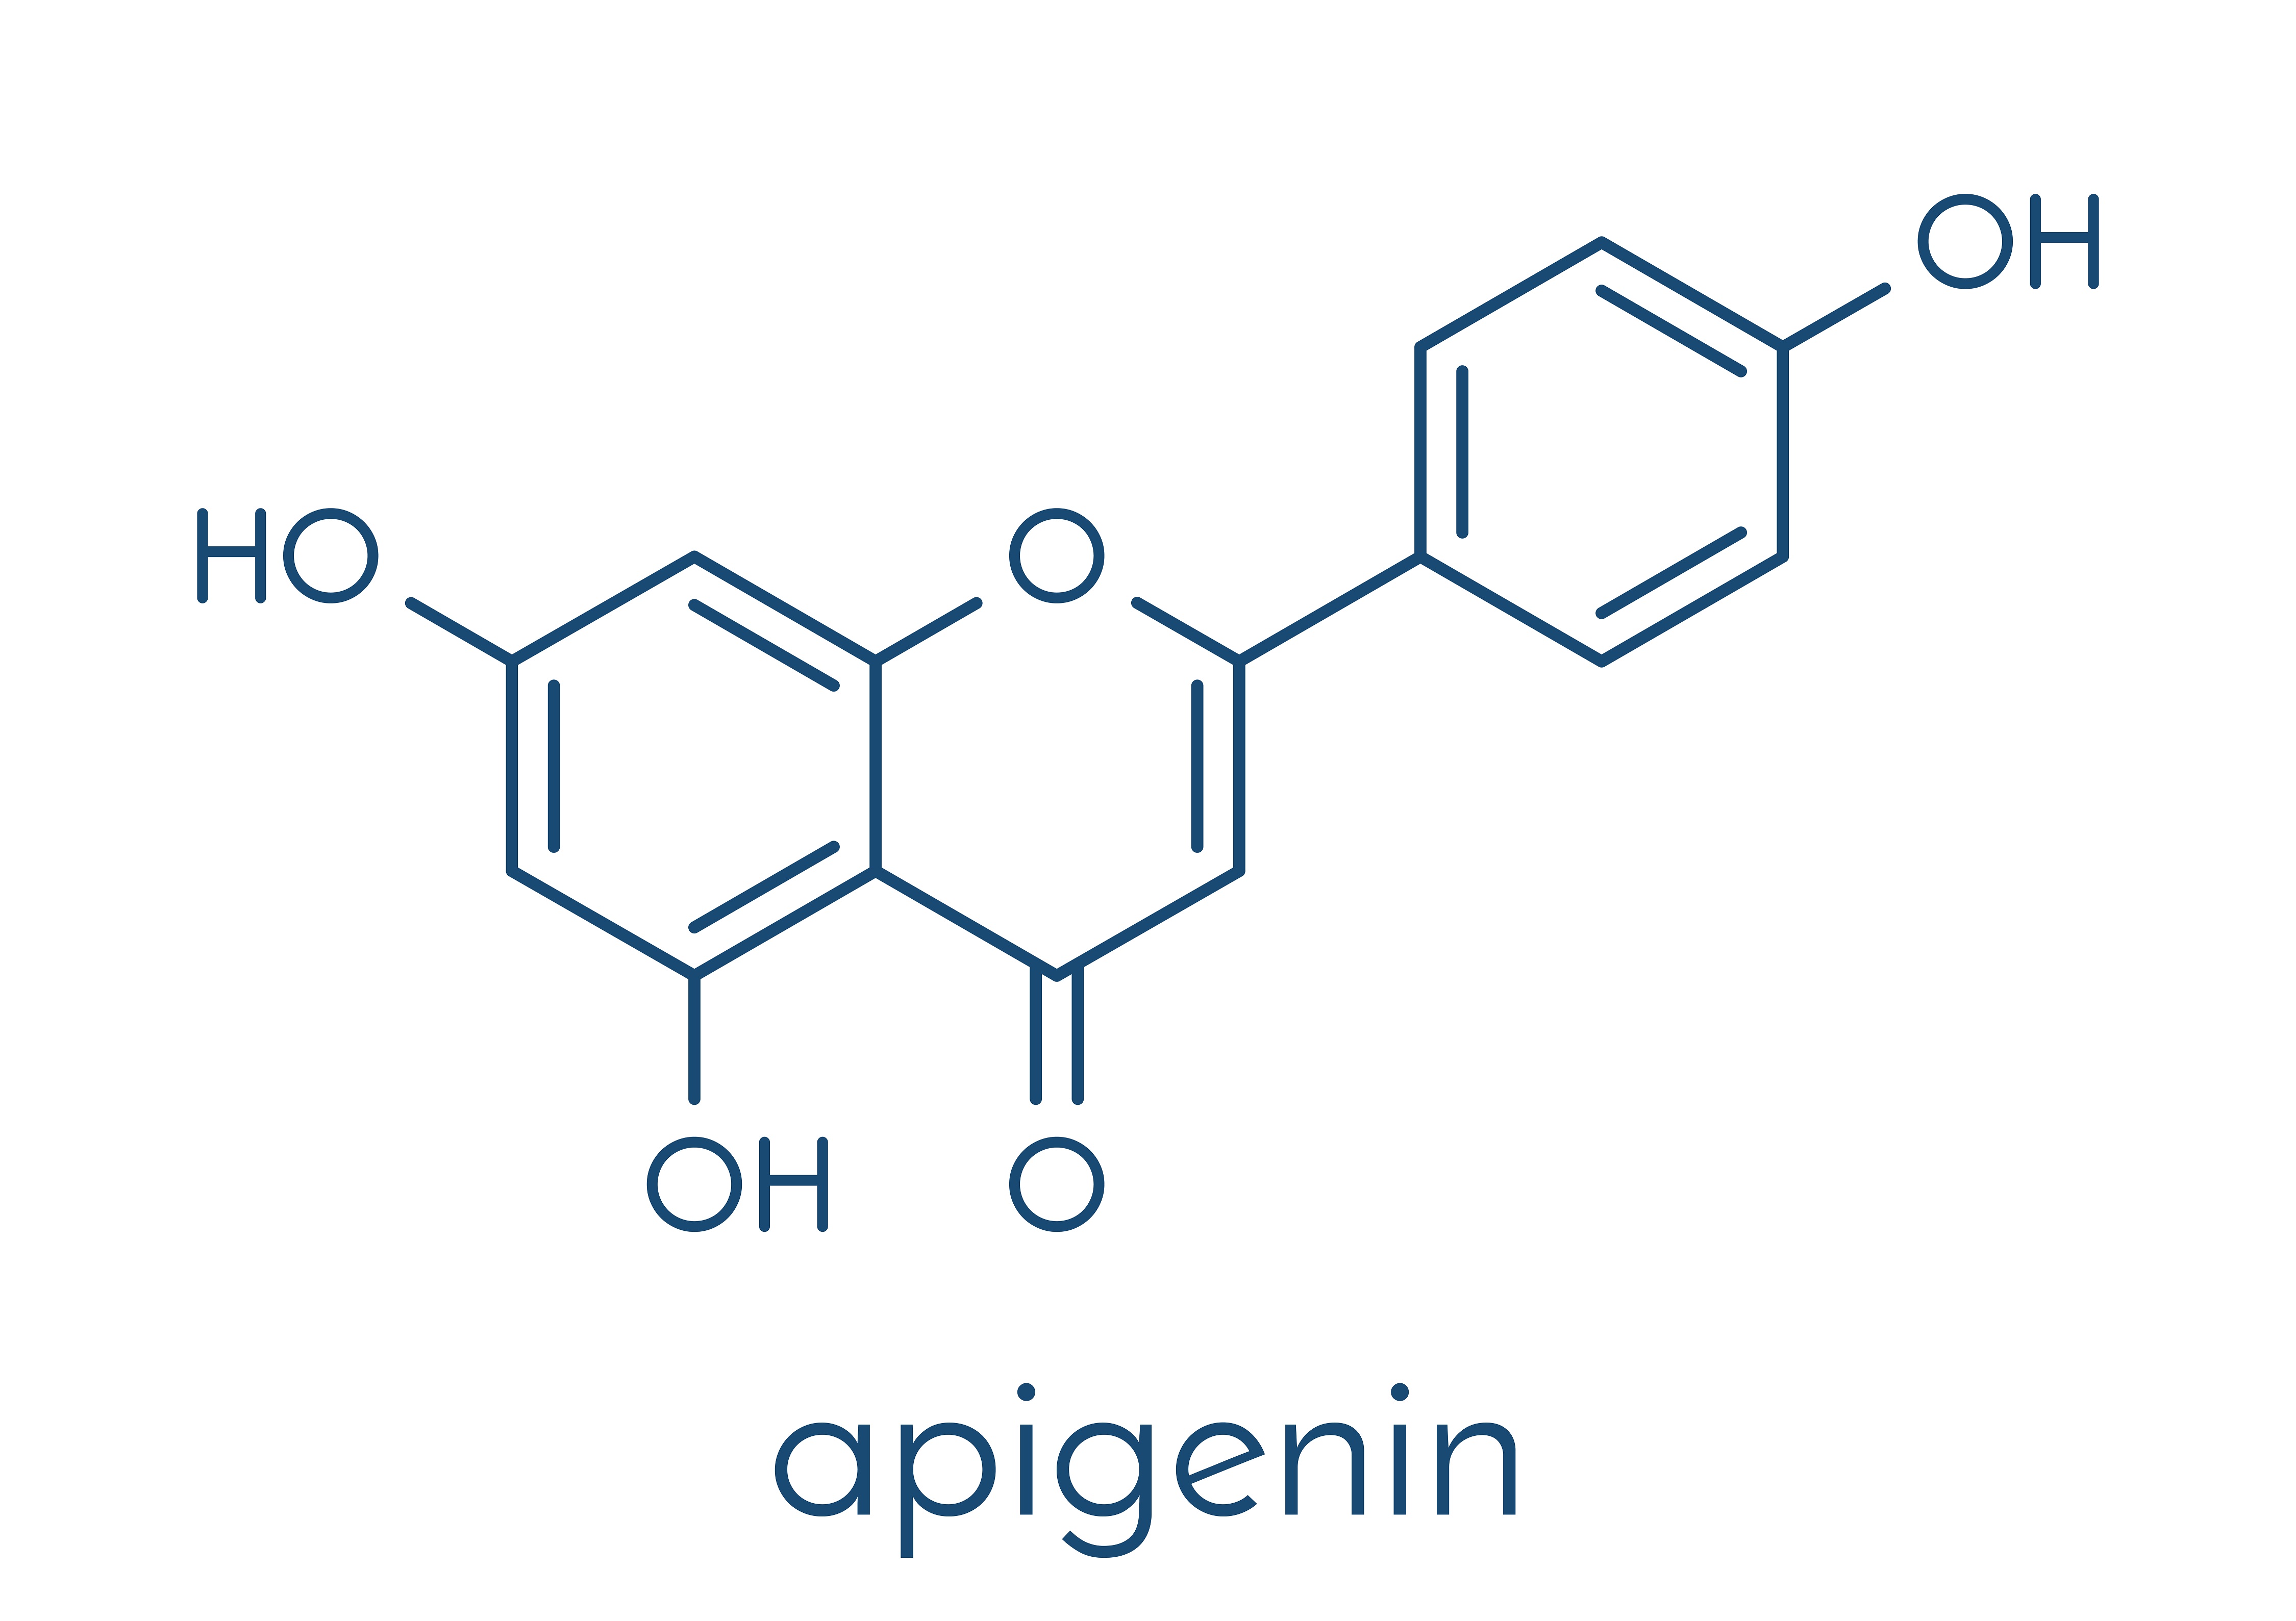 Apigenin - chemical formula